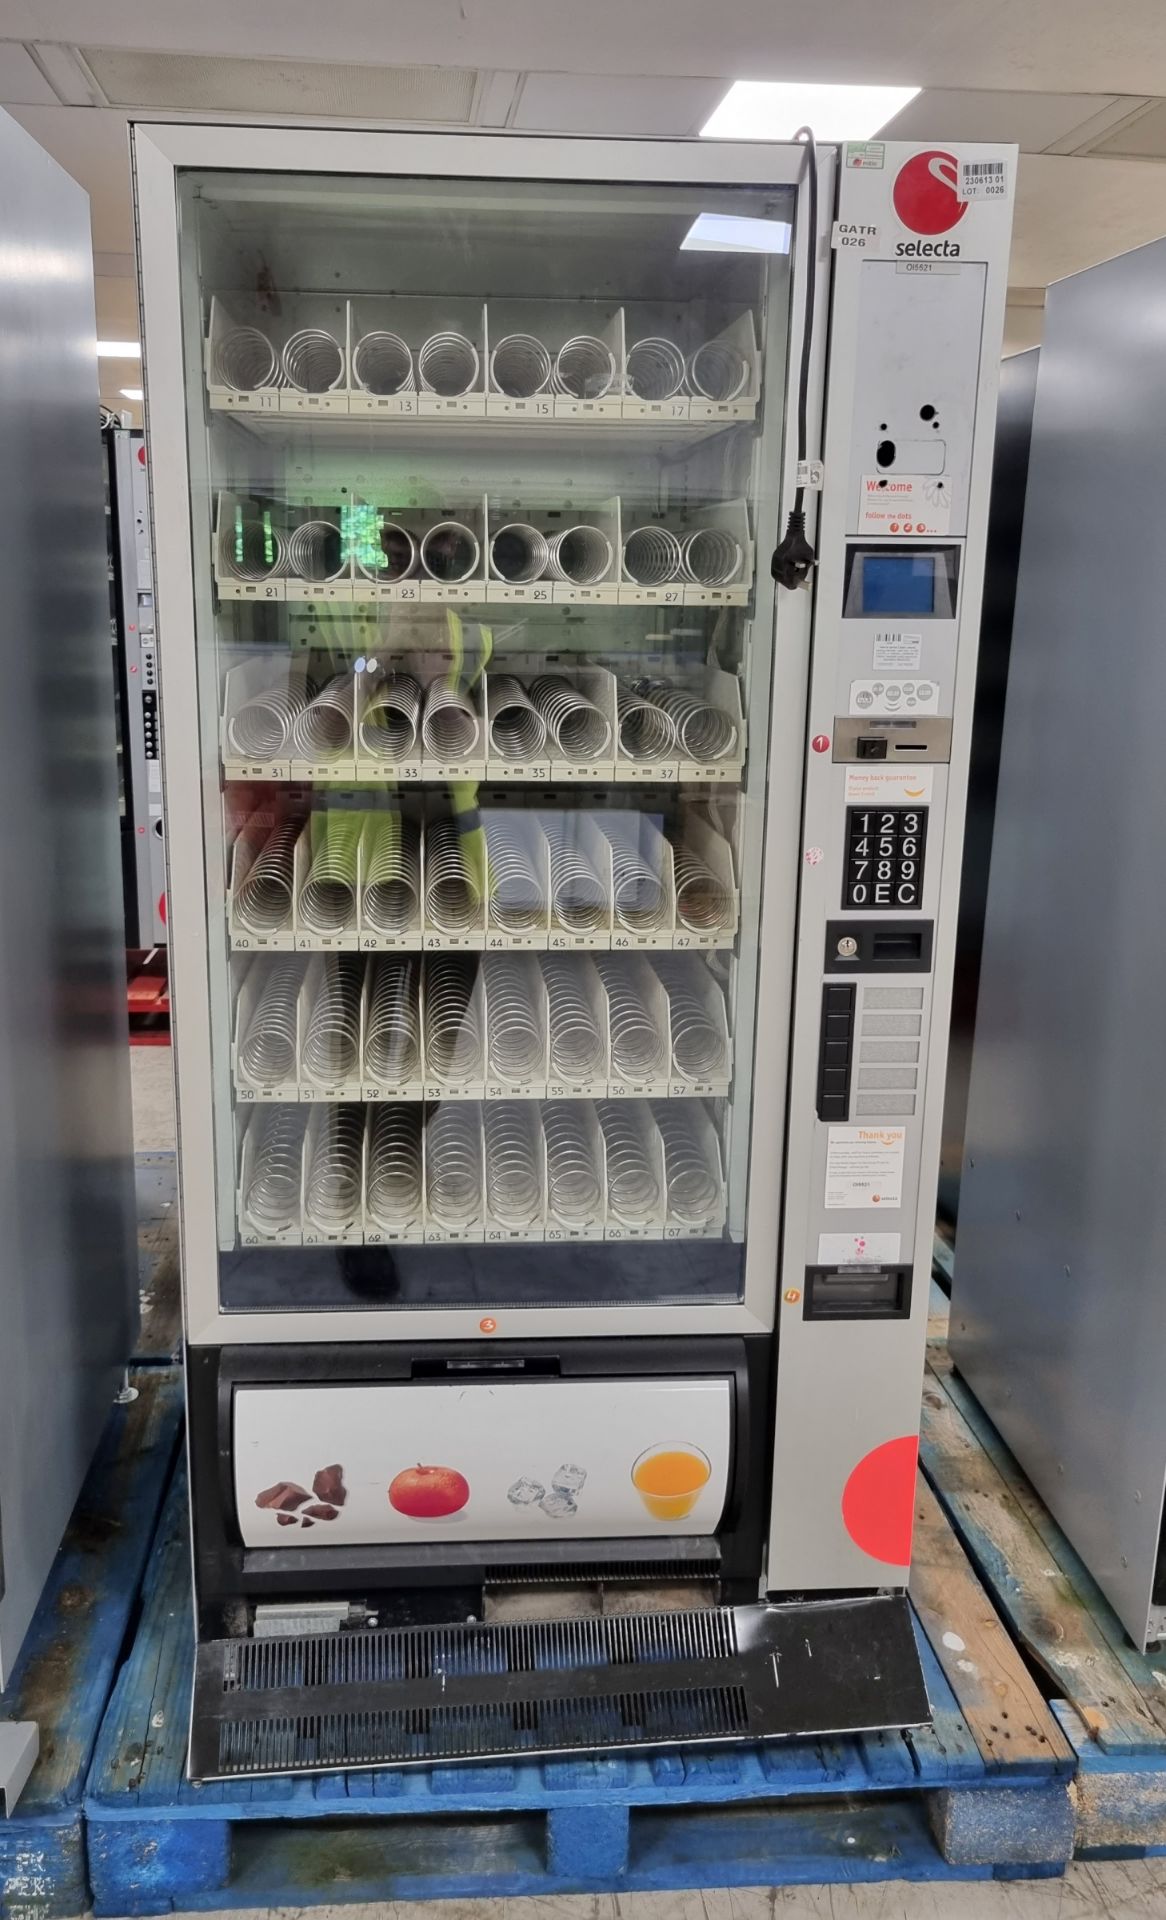 Selecta Samba Classic snacks vending machine - cash only - W 900 x D 870 x H 1850mm - DAMAGED